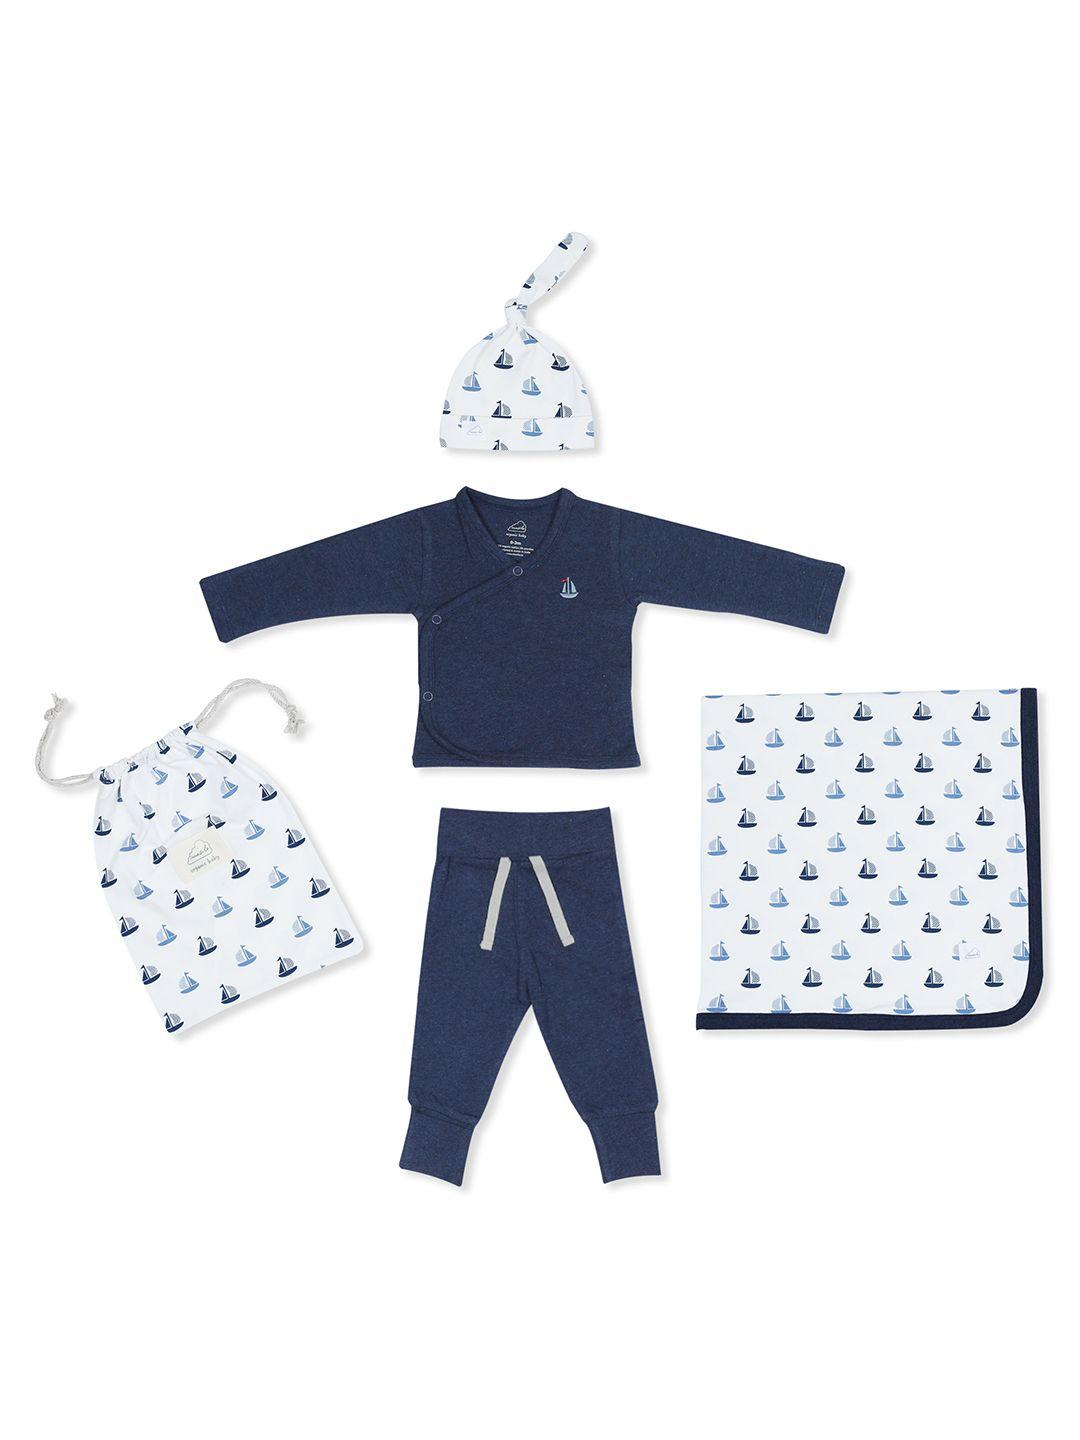 masilo boys blue & white top organic cotton clothing set